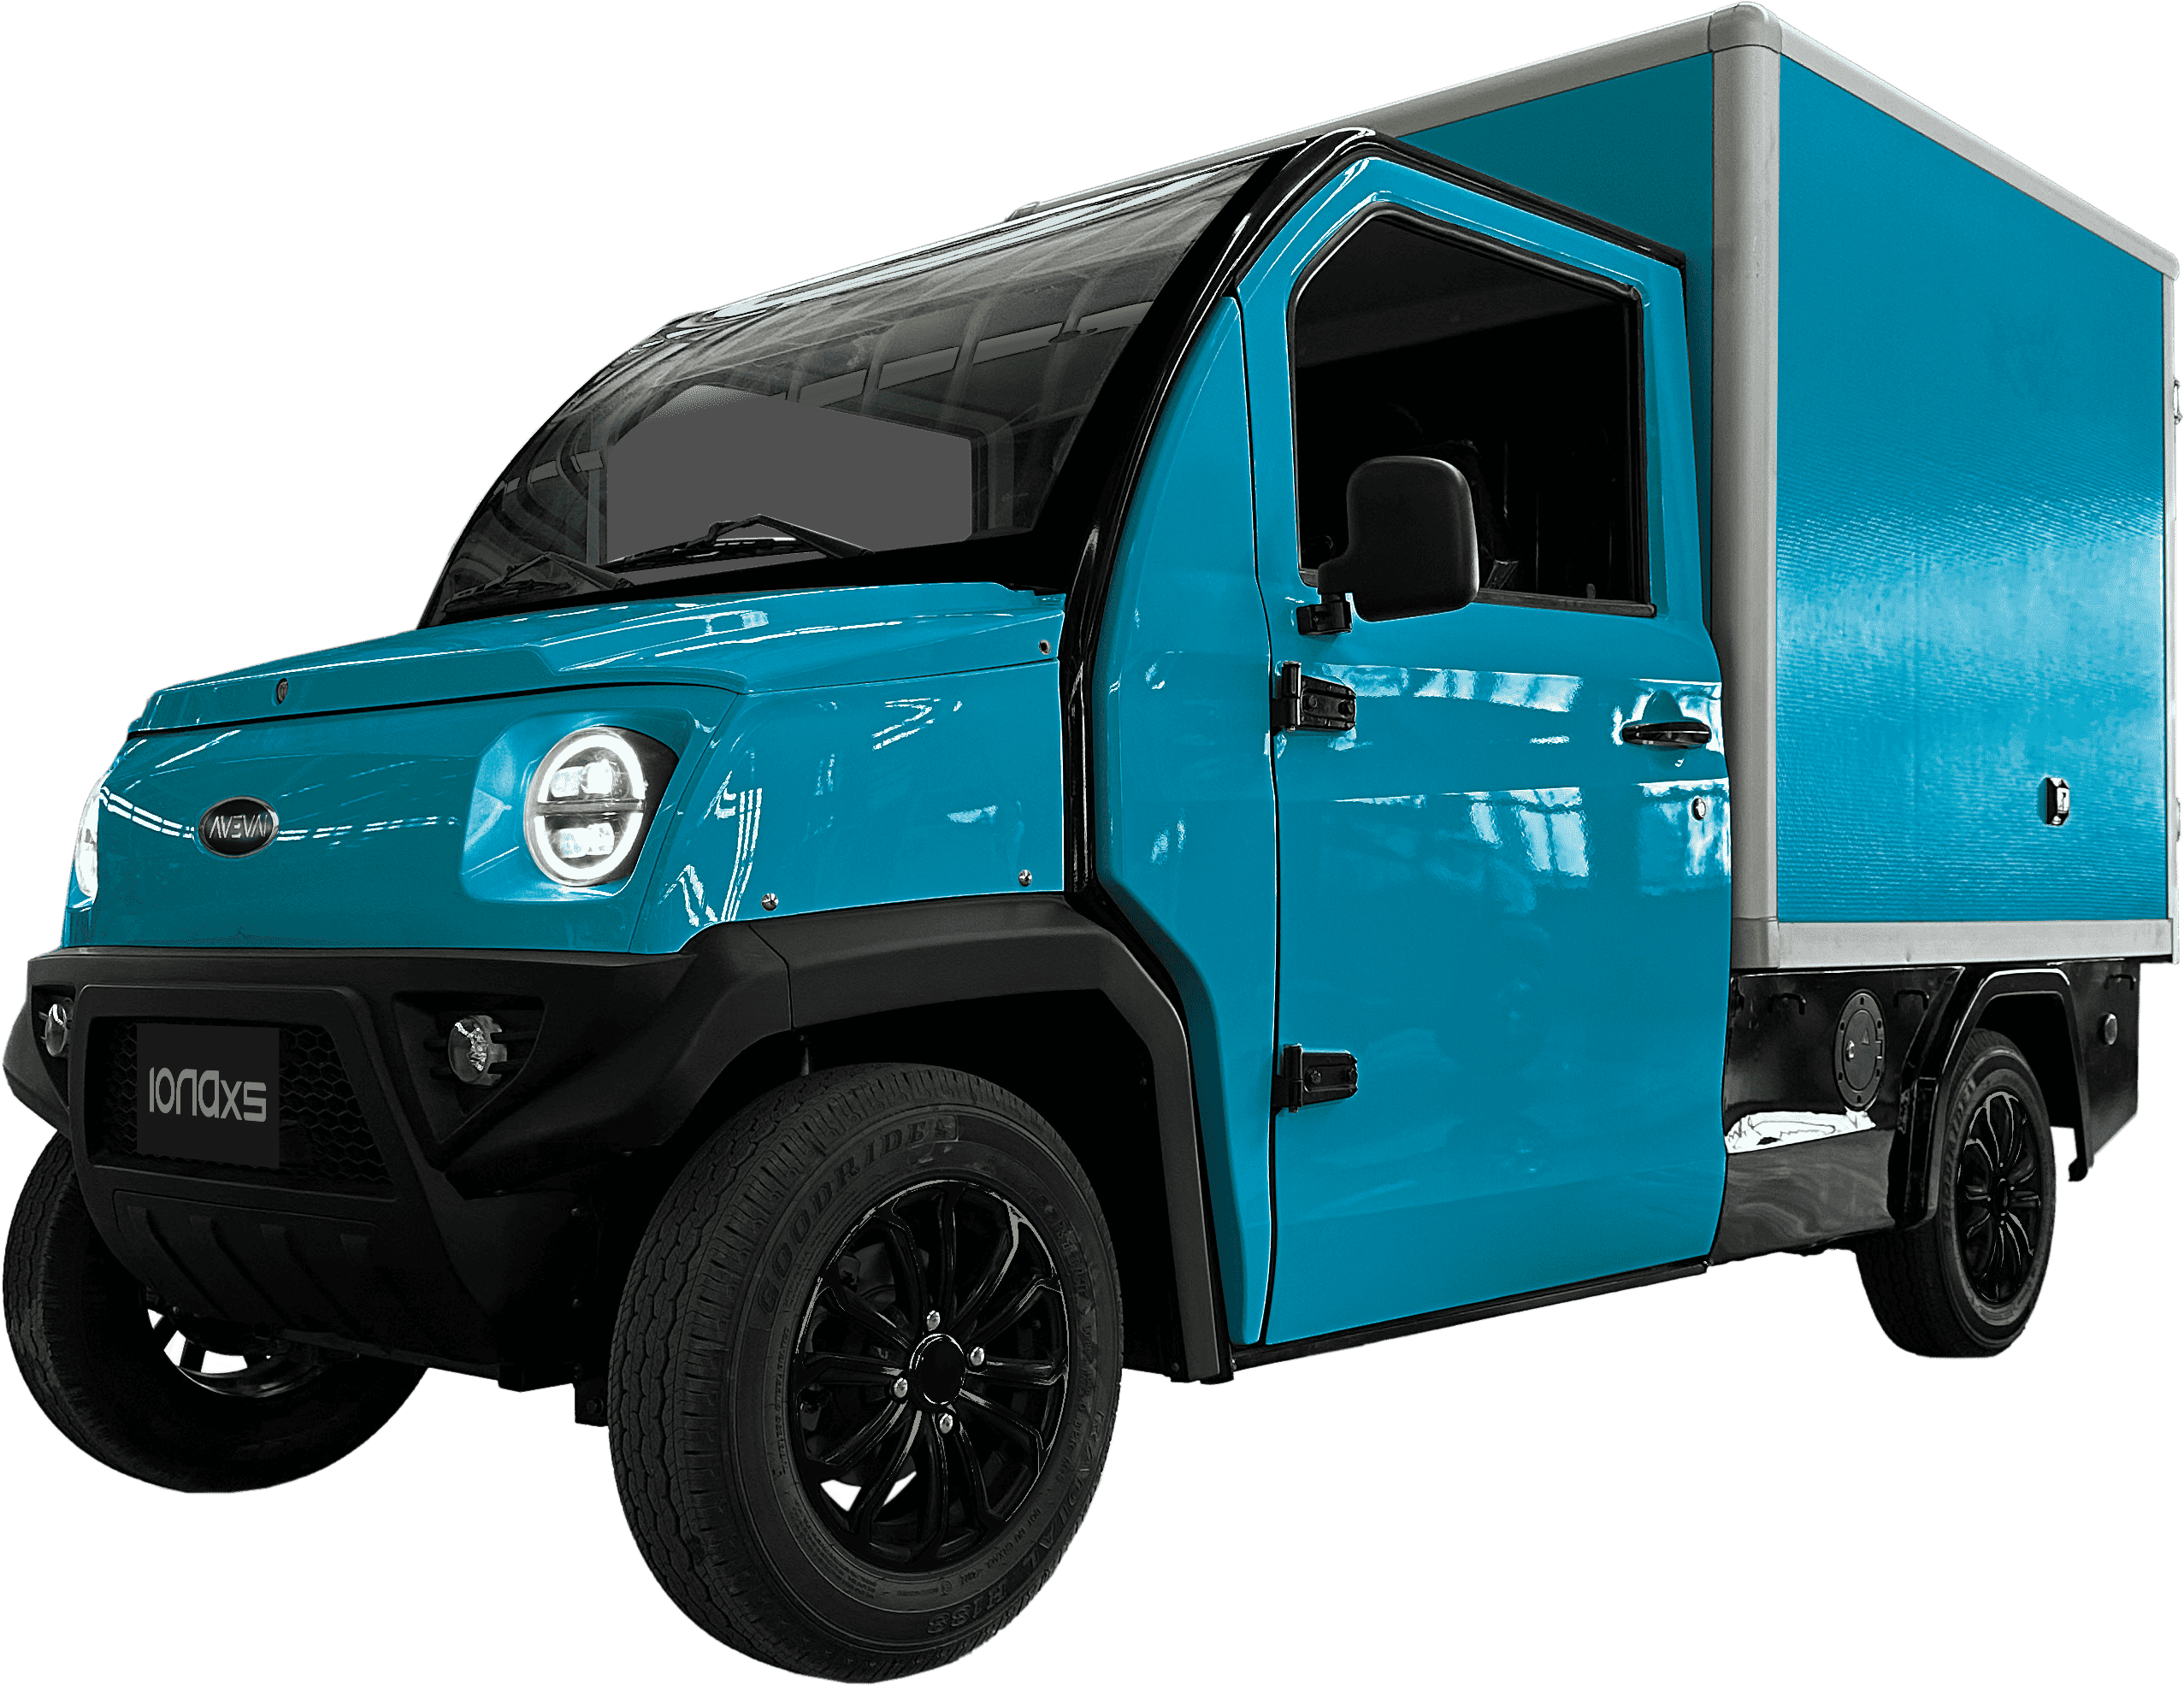 https://e-vehicleinfo.com/global/avevai-introduces-iona-xs-mini-electric-truck-for-urban-transportation/